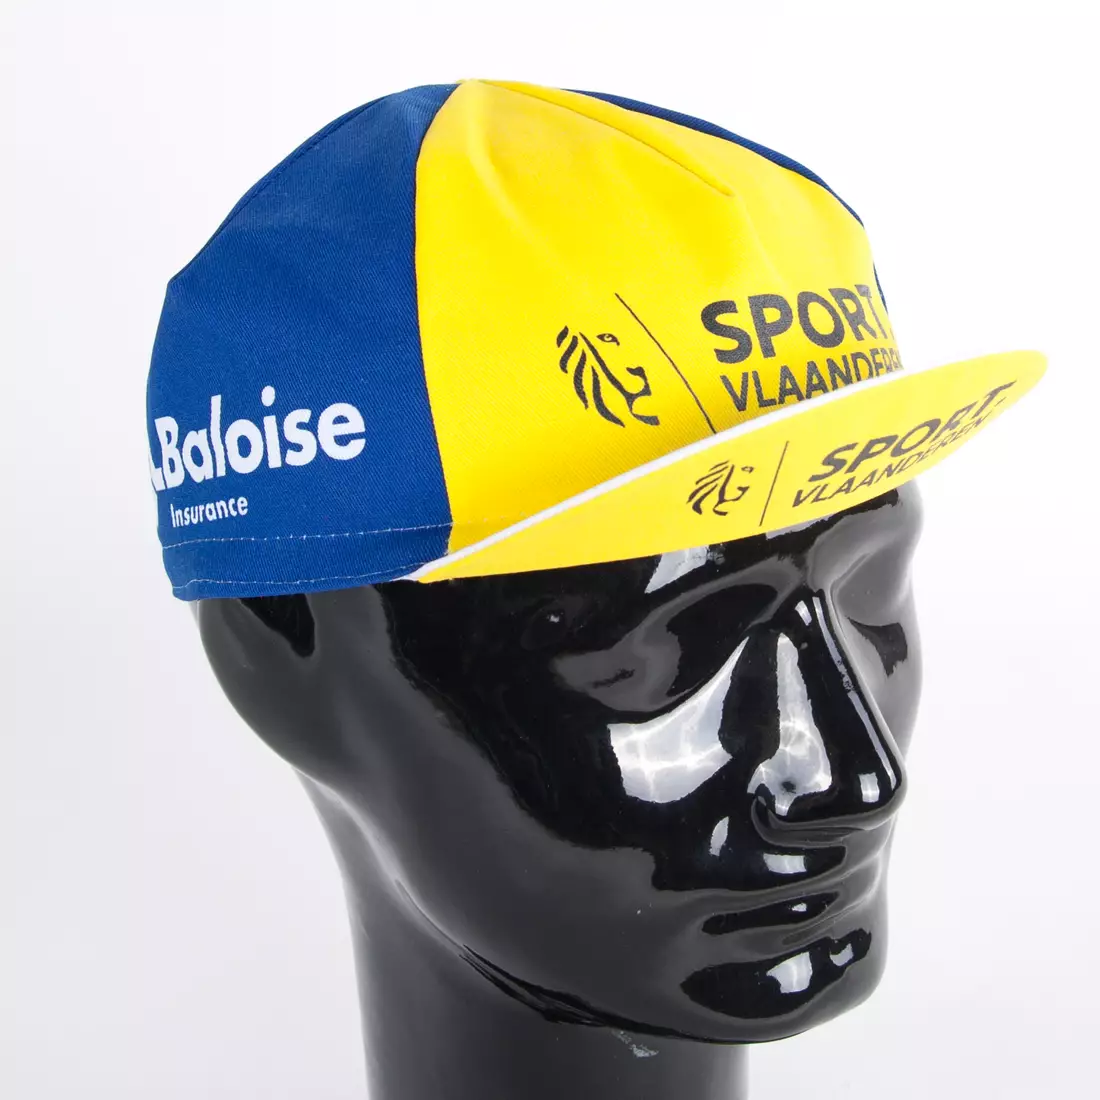 Apis Profi cycling cap SPORT vlaanderen Baloise Insurance blue yellow white visor